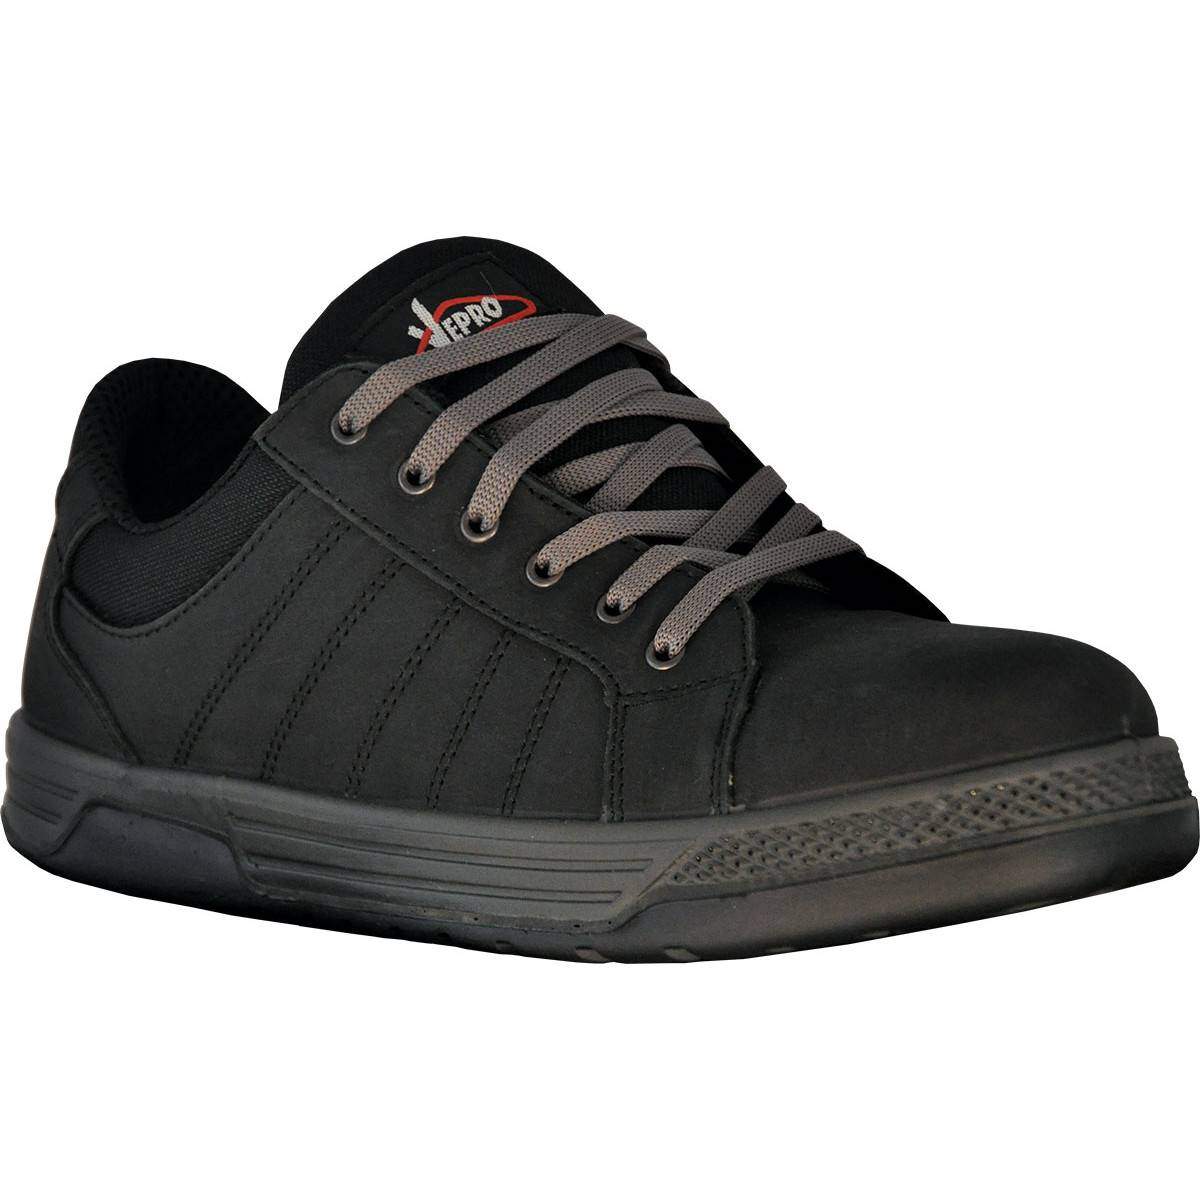 MANIBASSE low safety shoes size 44, black nubuck leather